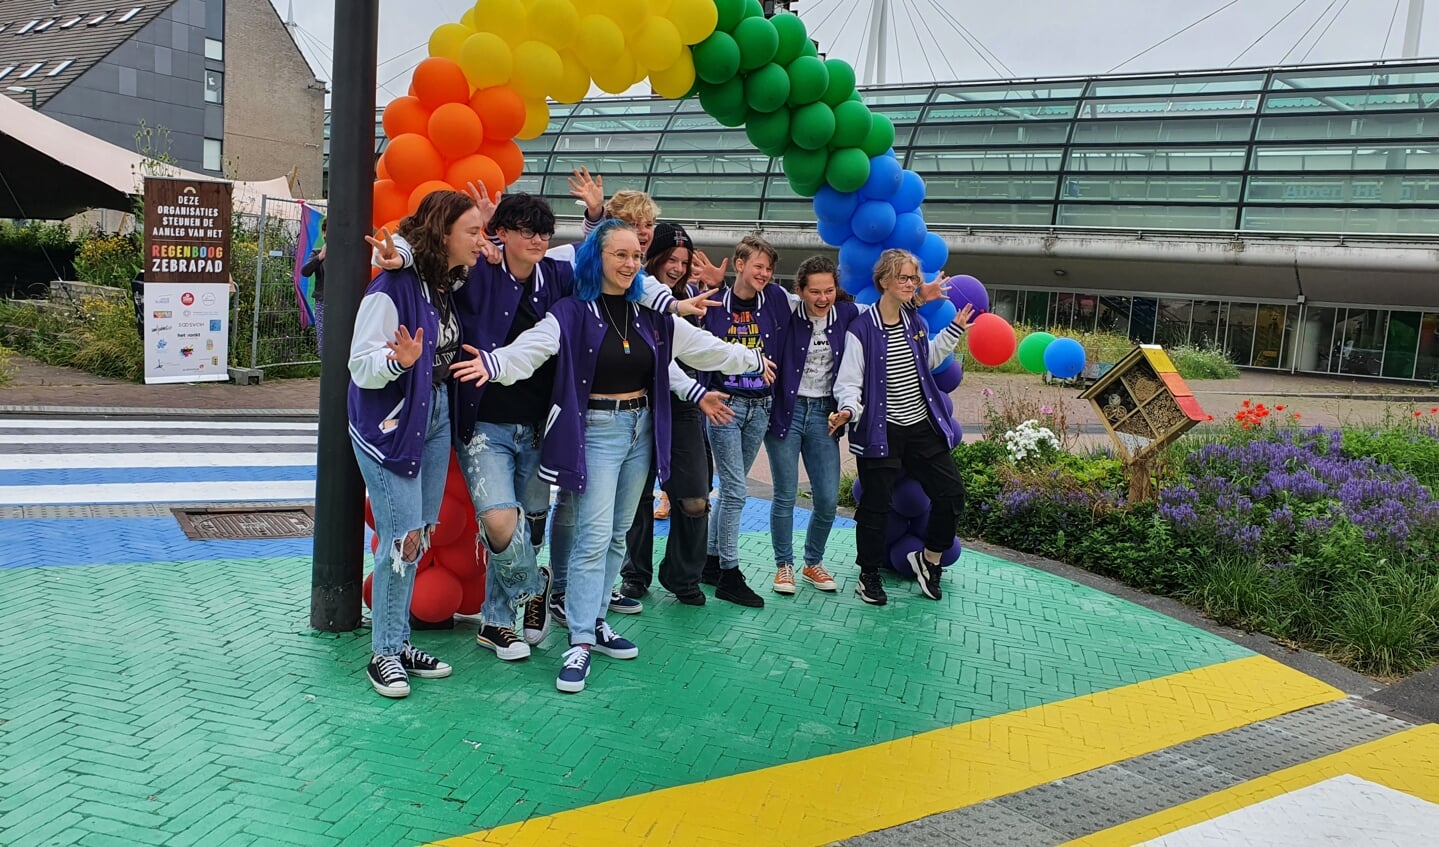 GSA leden vieren hun regenboogzebrapad